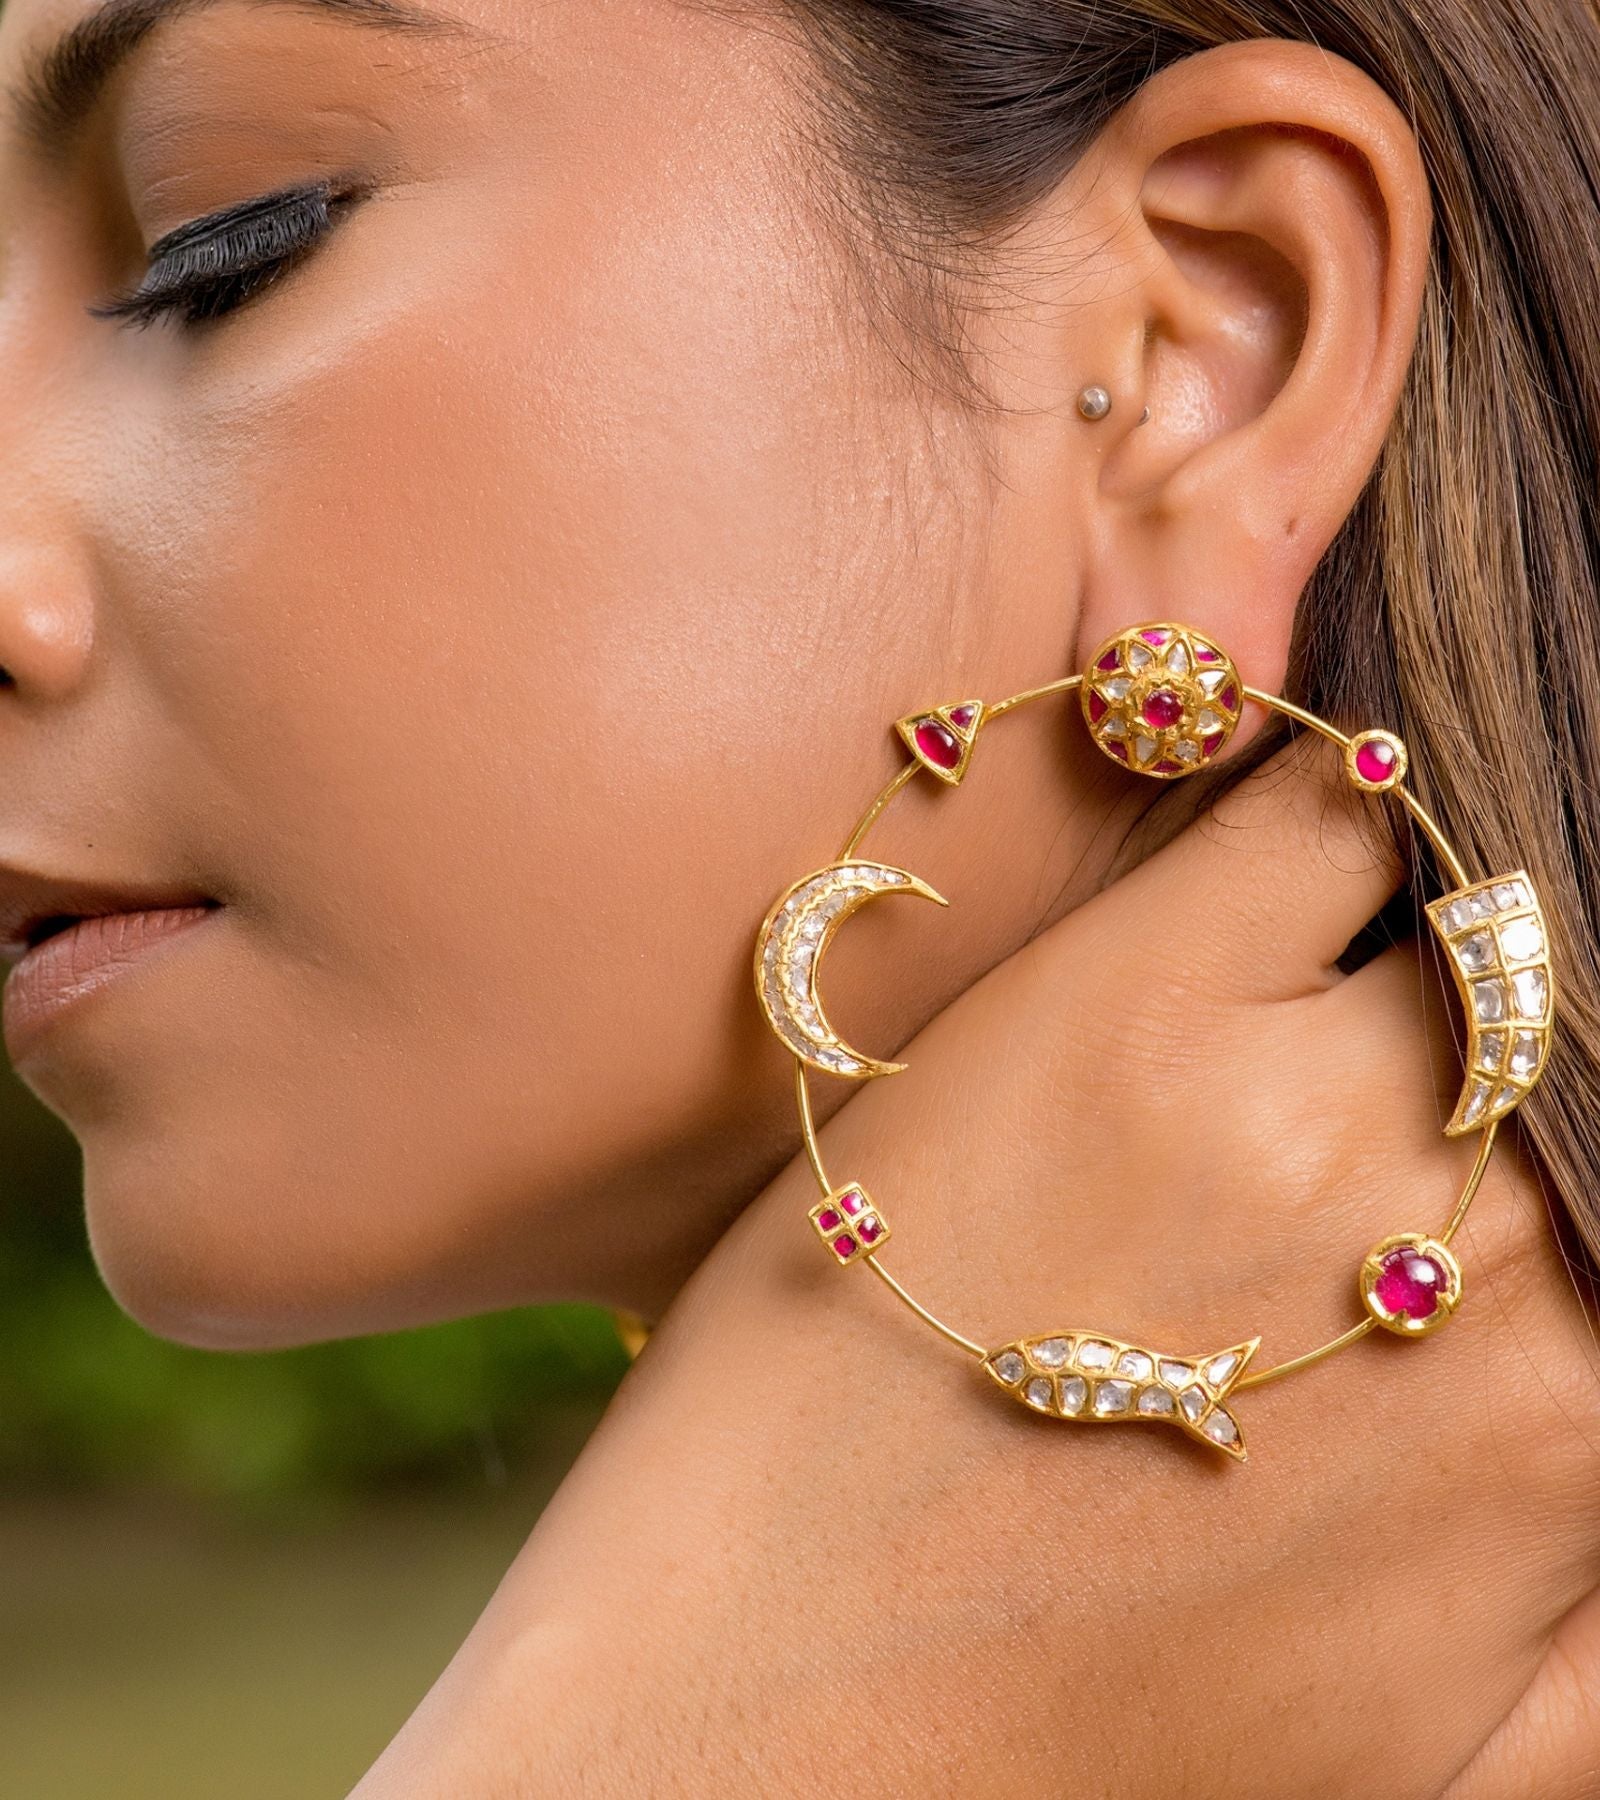 Traditional Earrings by UNCUT Jewelry